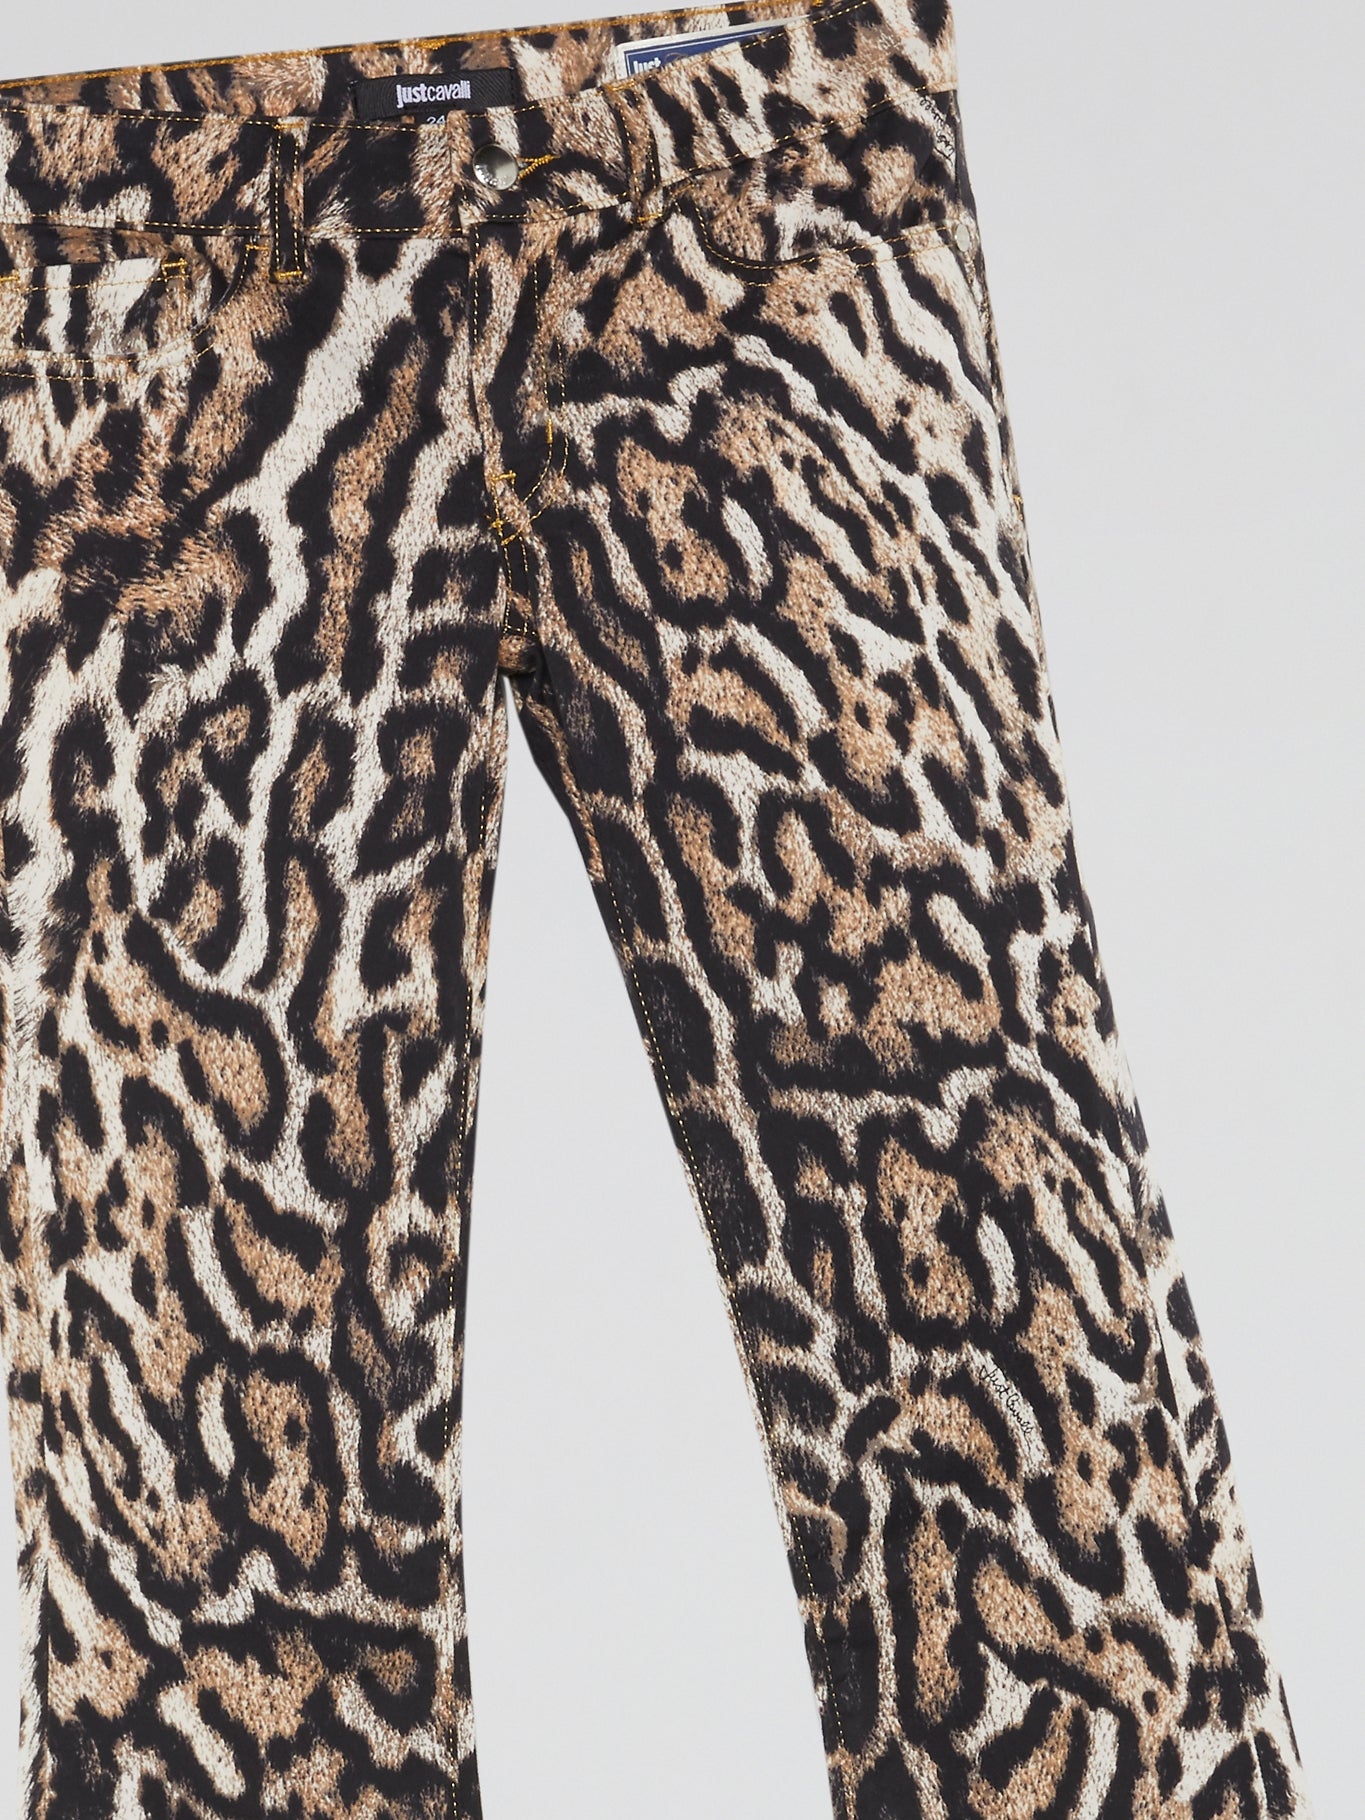 Leopard Print Bootcut Pants